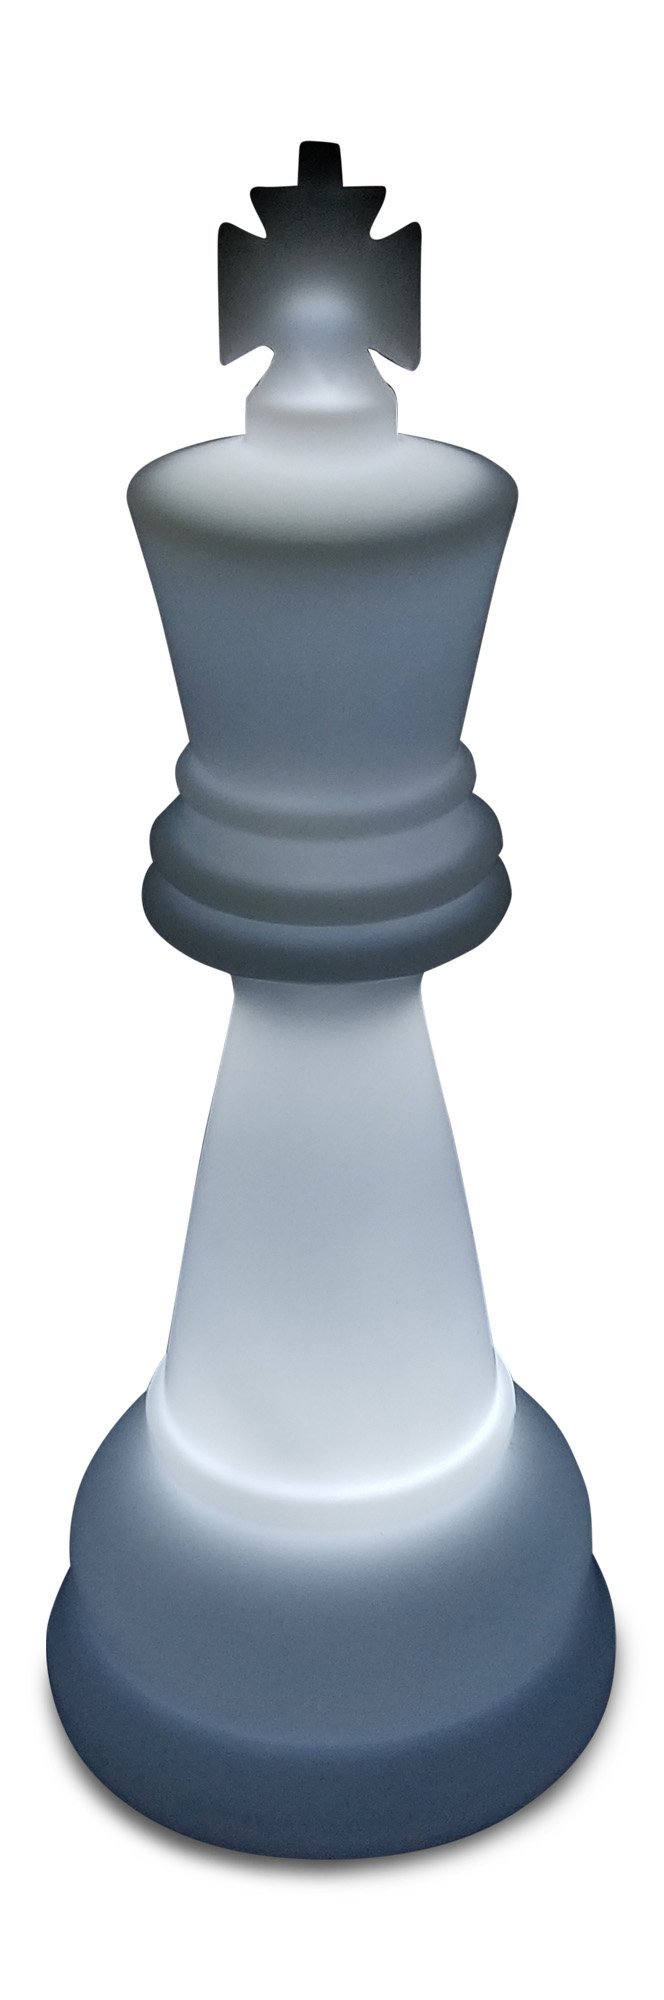 MegaChess 26 Inch Perfect King Light-Up Giant Chess Piece - White |  | MegaChess.com